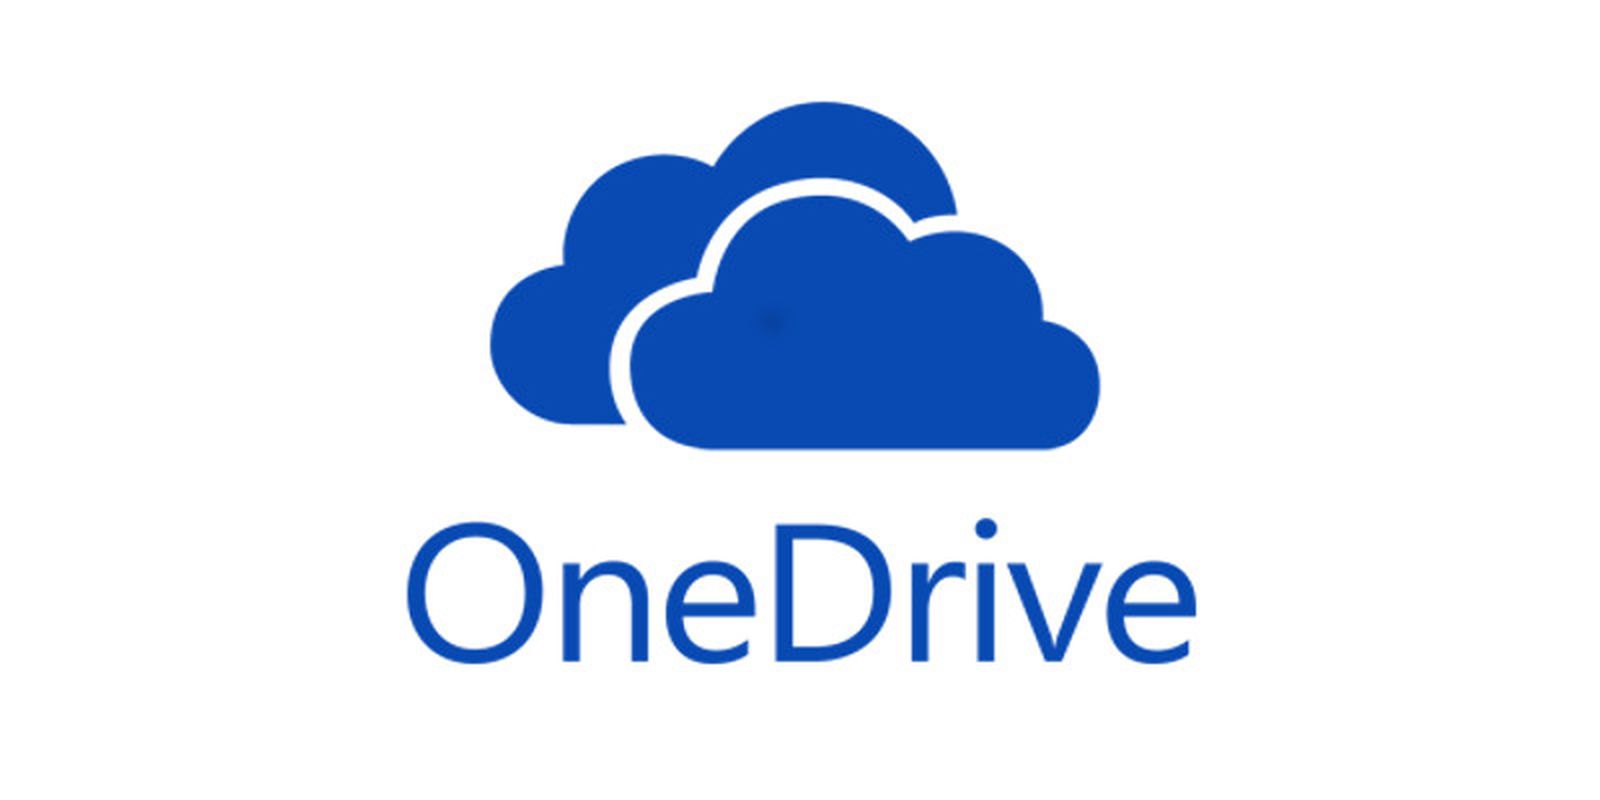 Microsoft OneDrive ganha suporte nativo para Apple Silicon Macs